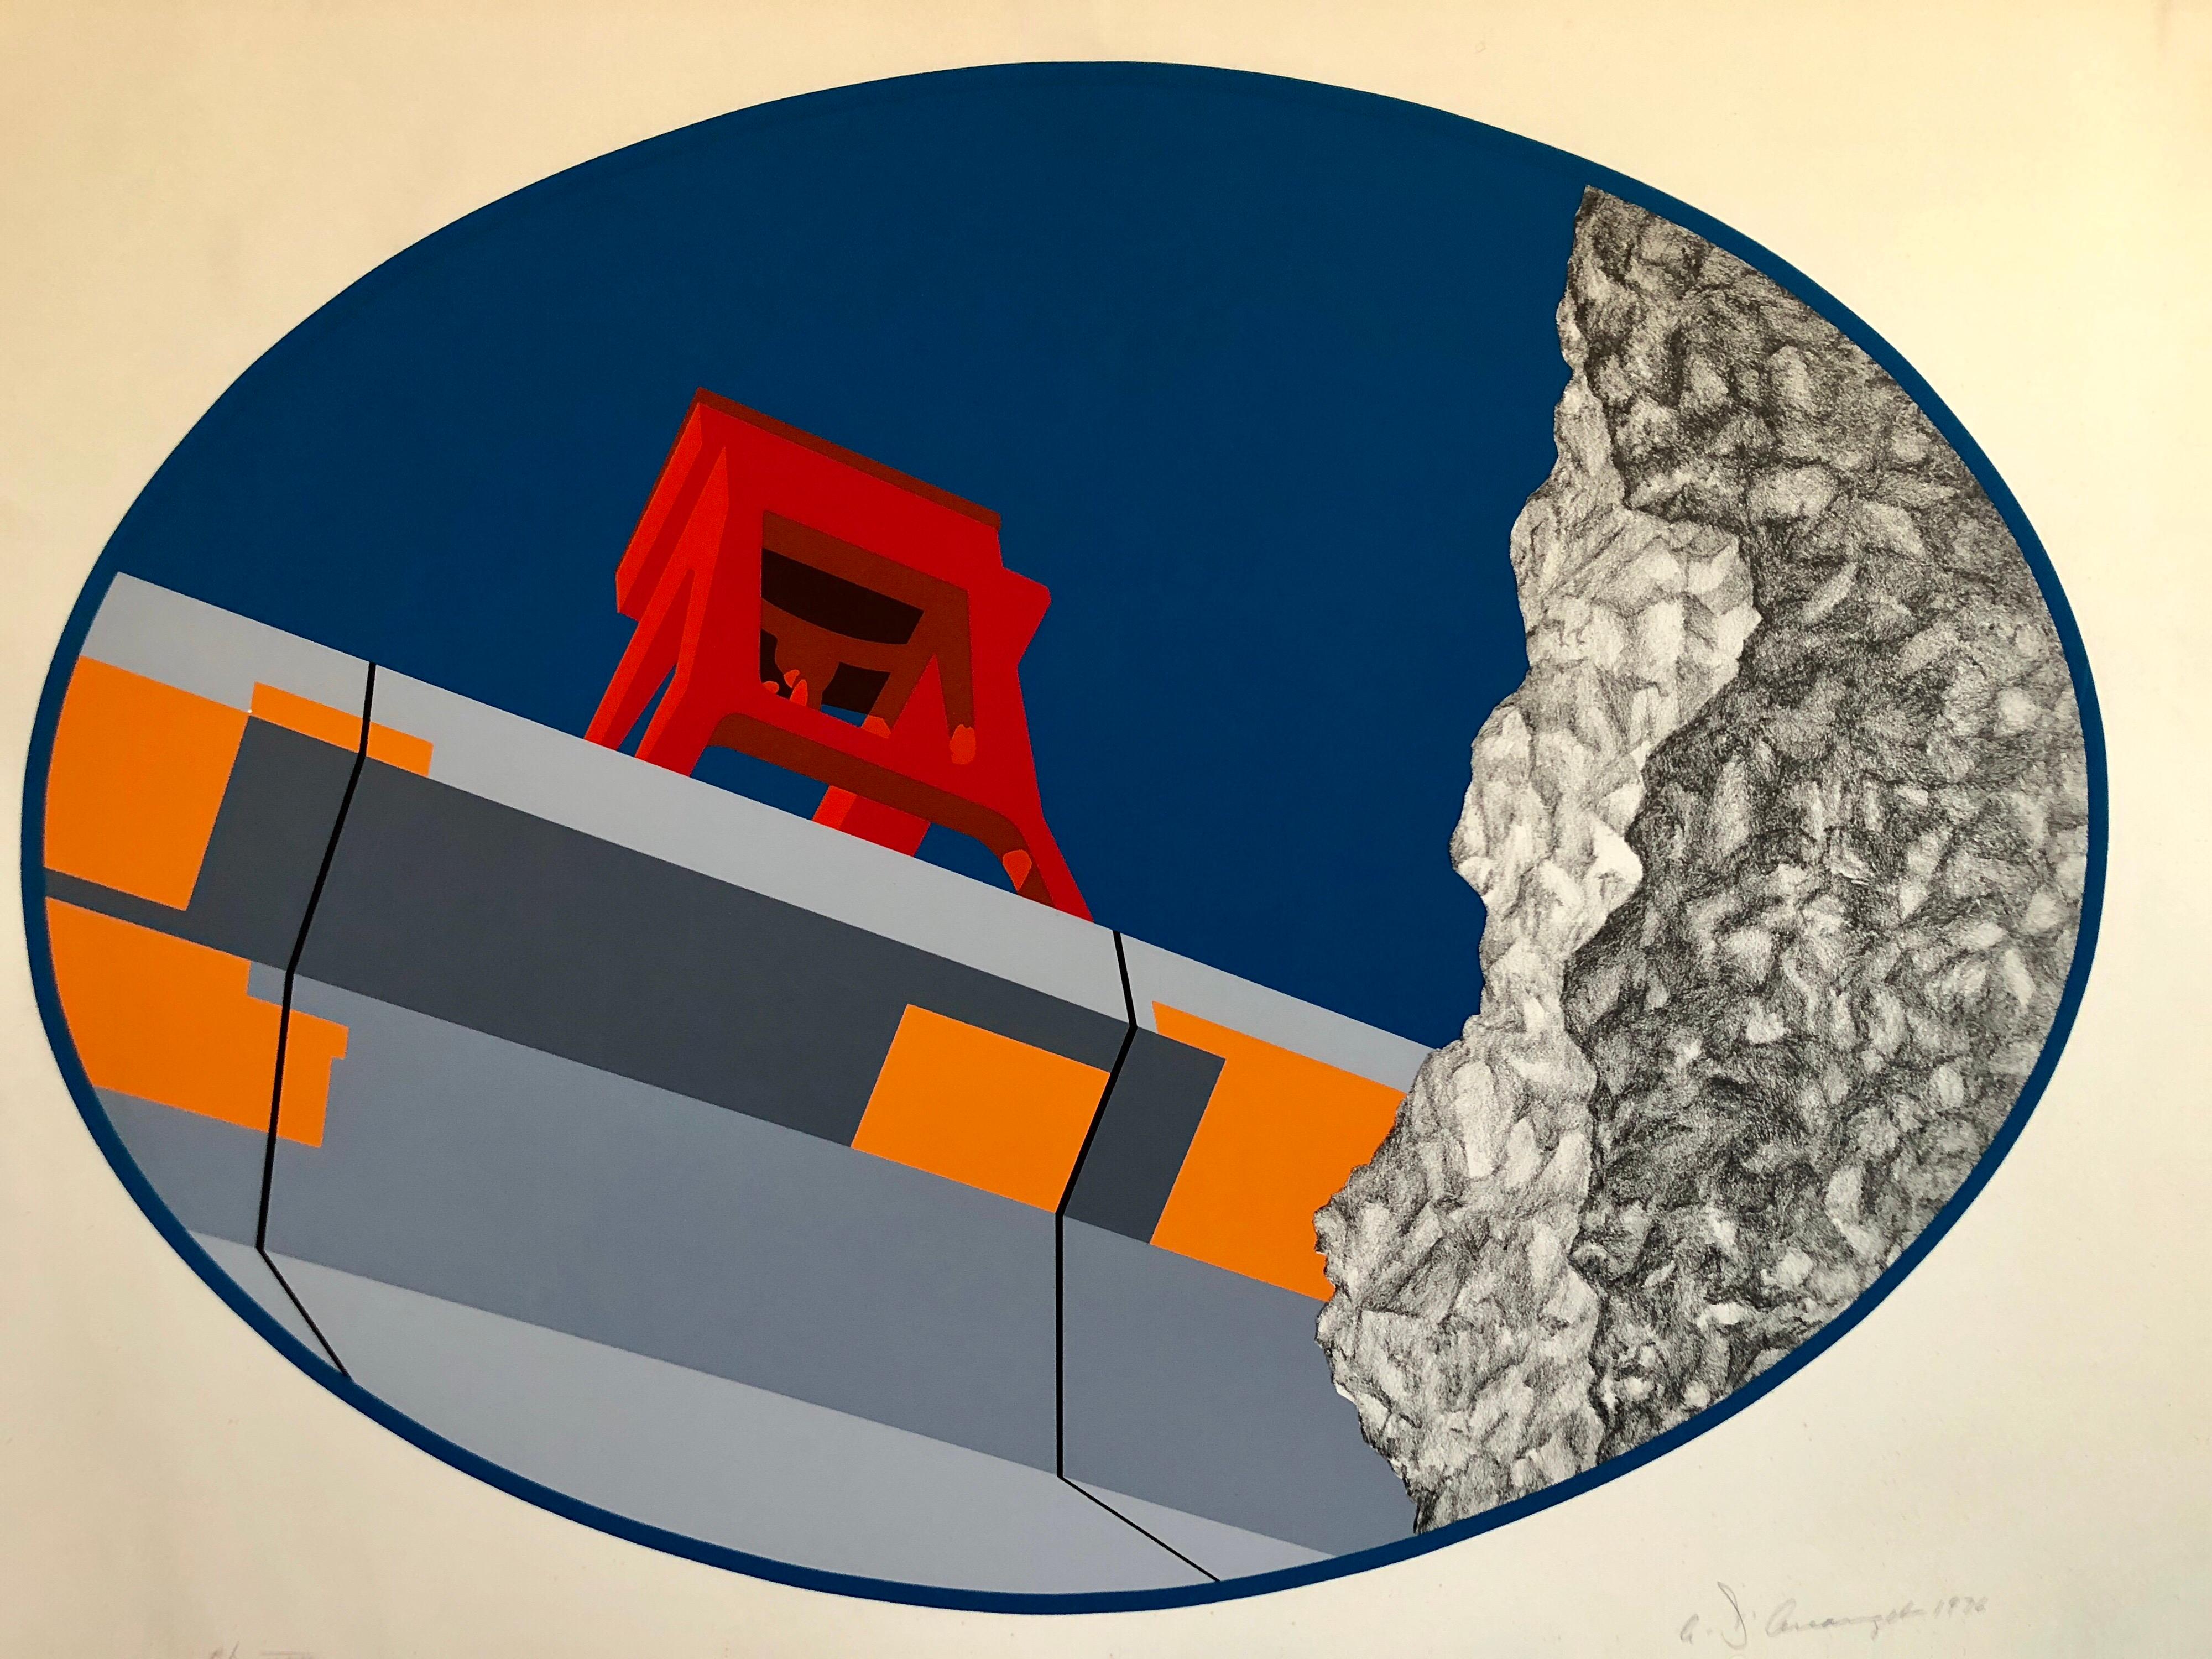 Allan D'Arcangelo Abstract Print - Pop Art Abstract American Hard Edged Landscape with Bridge